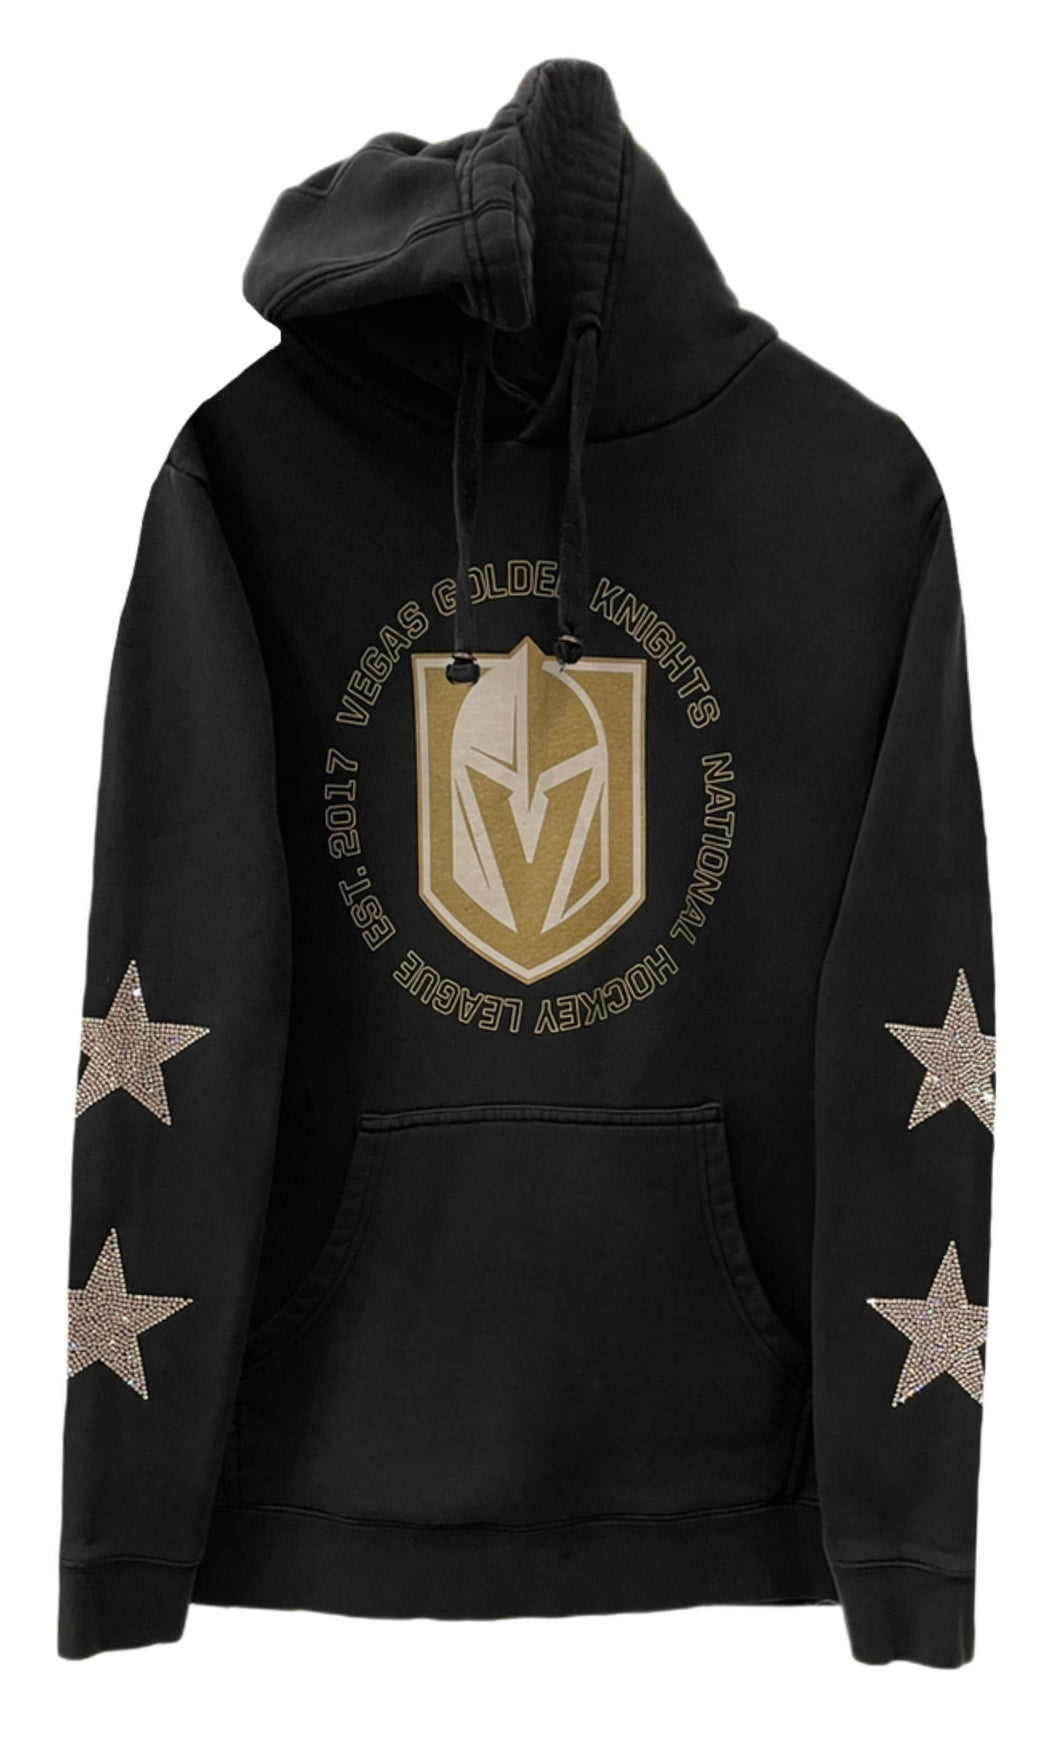 Vegas Golden Knights, NHL Vintage Hoodie with Crystal Star Design